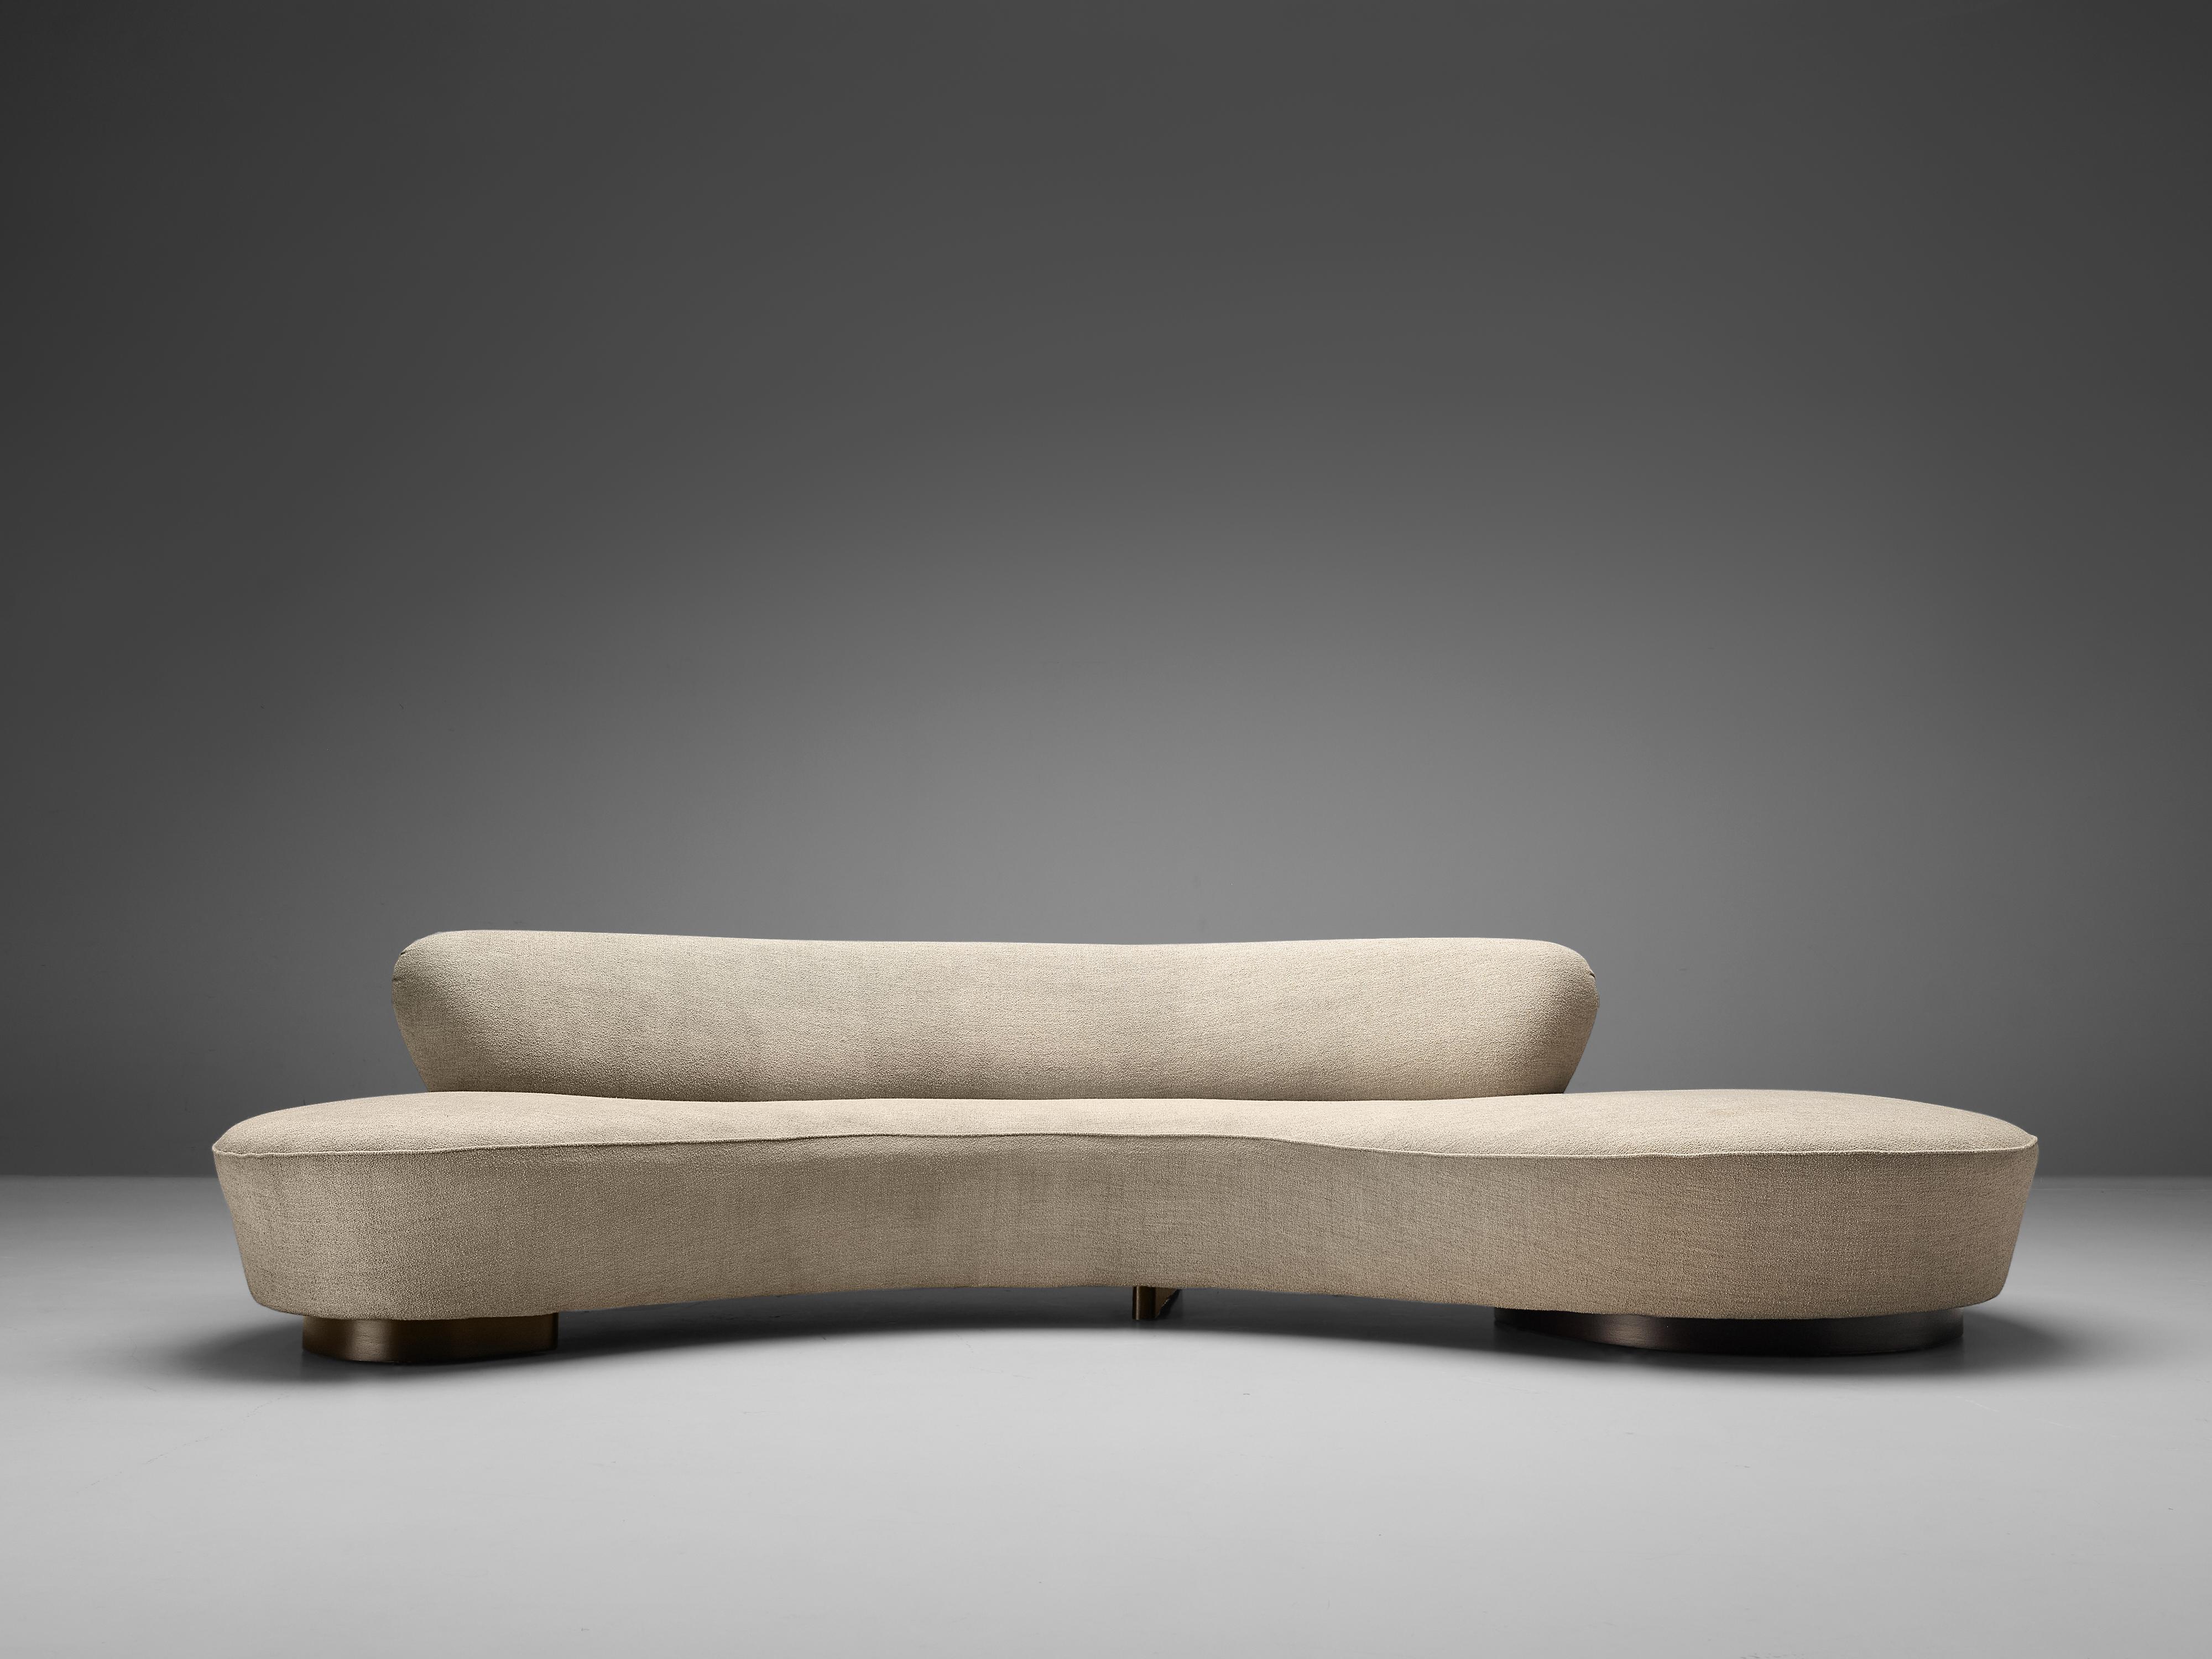 American Iconic Vladimir Kagan 'Serpentine' Sofa in Off-White Upholstery